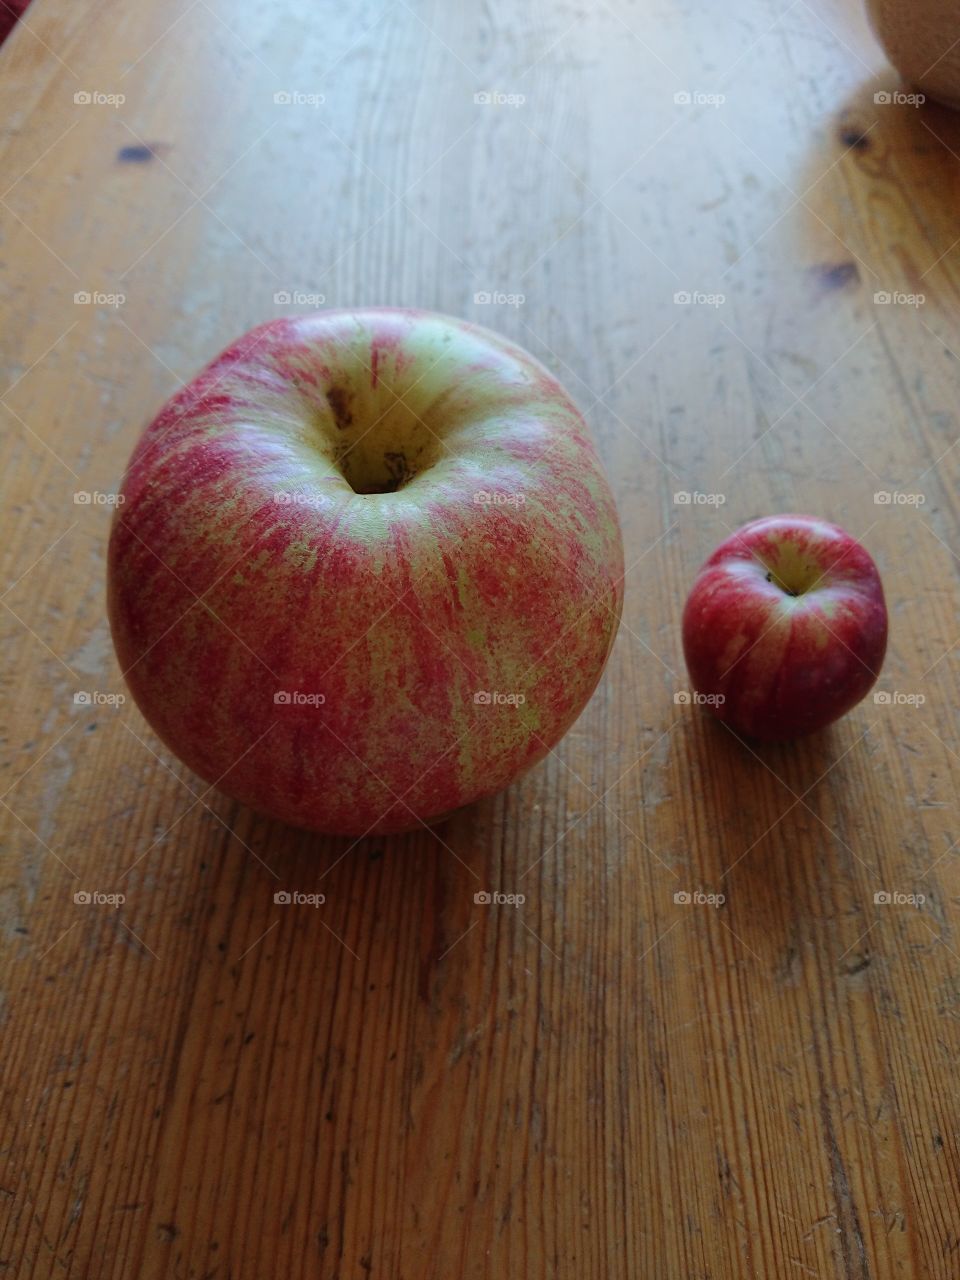 Big apple small apple